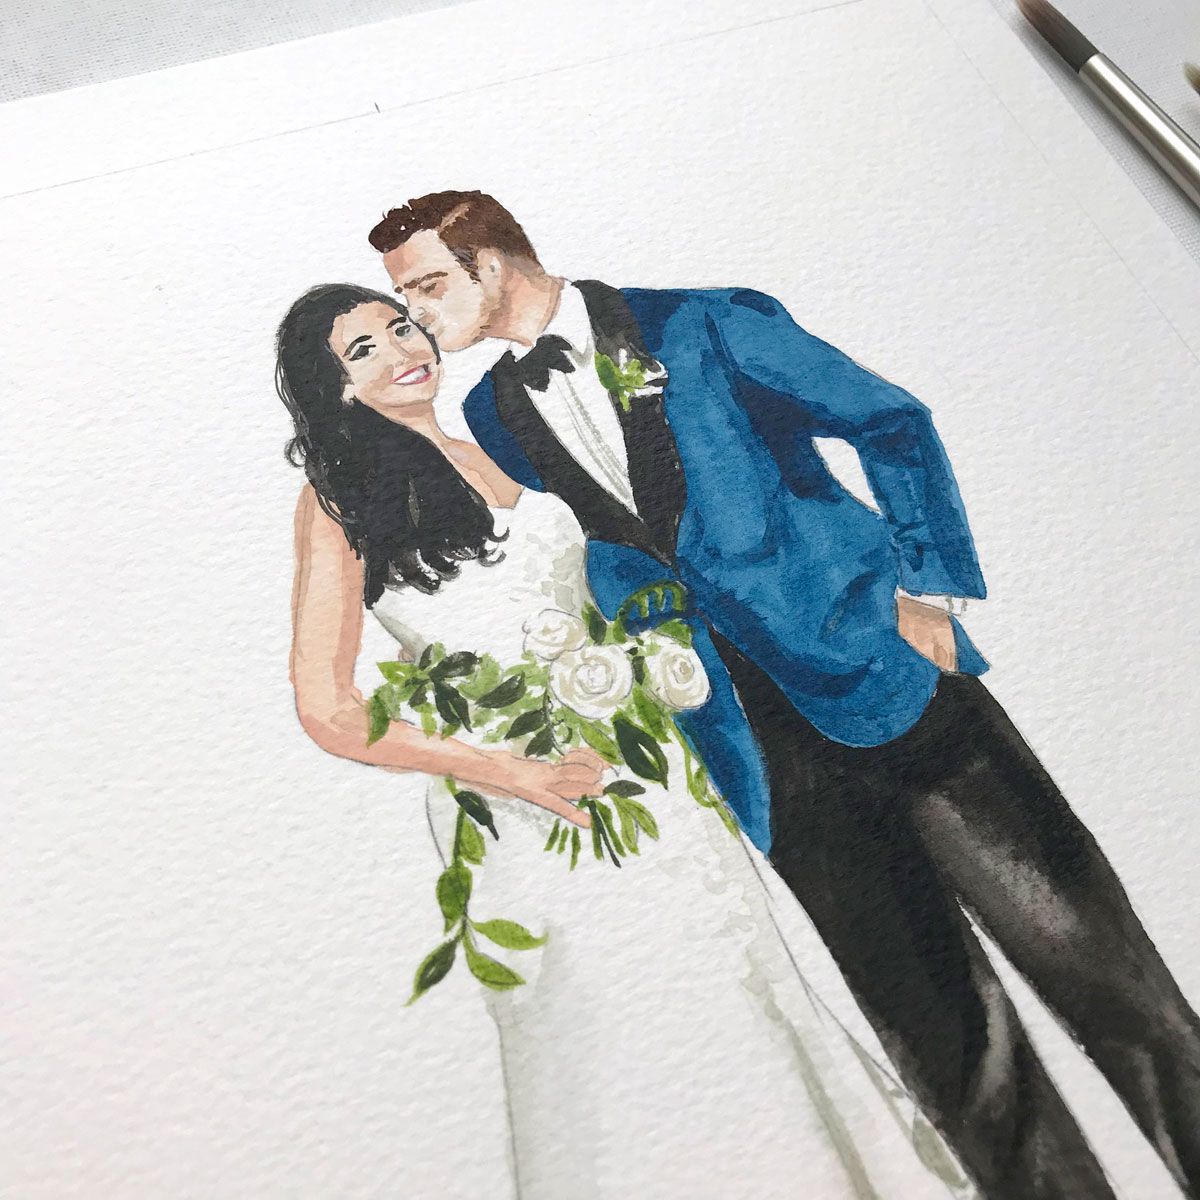 Hand-painted watercolor wedding portrait illustration by artist Michelle Mospens. - MospensStudio.com